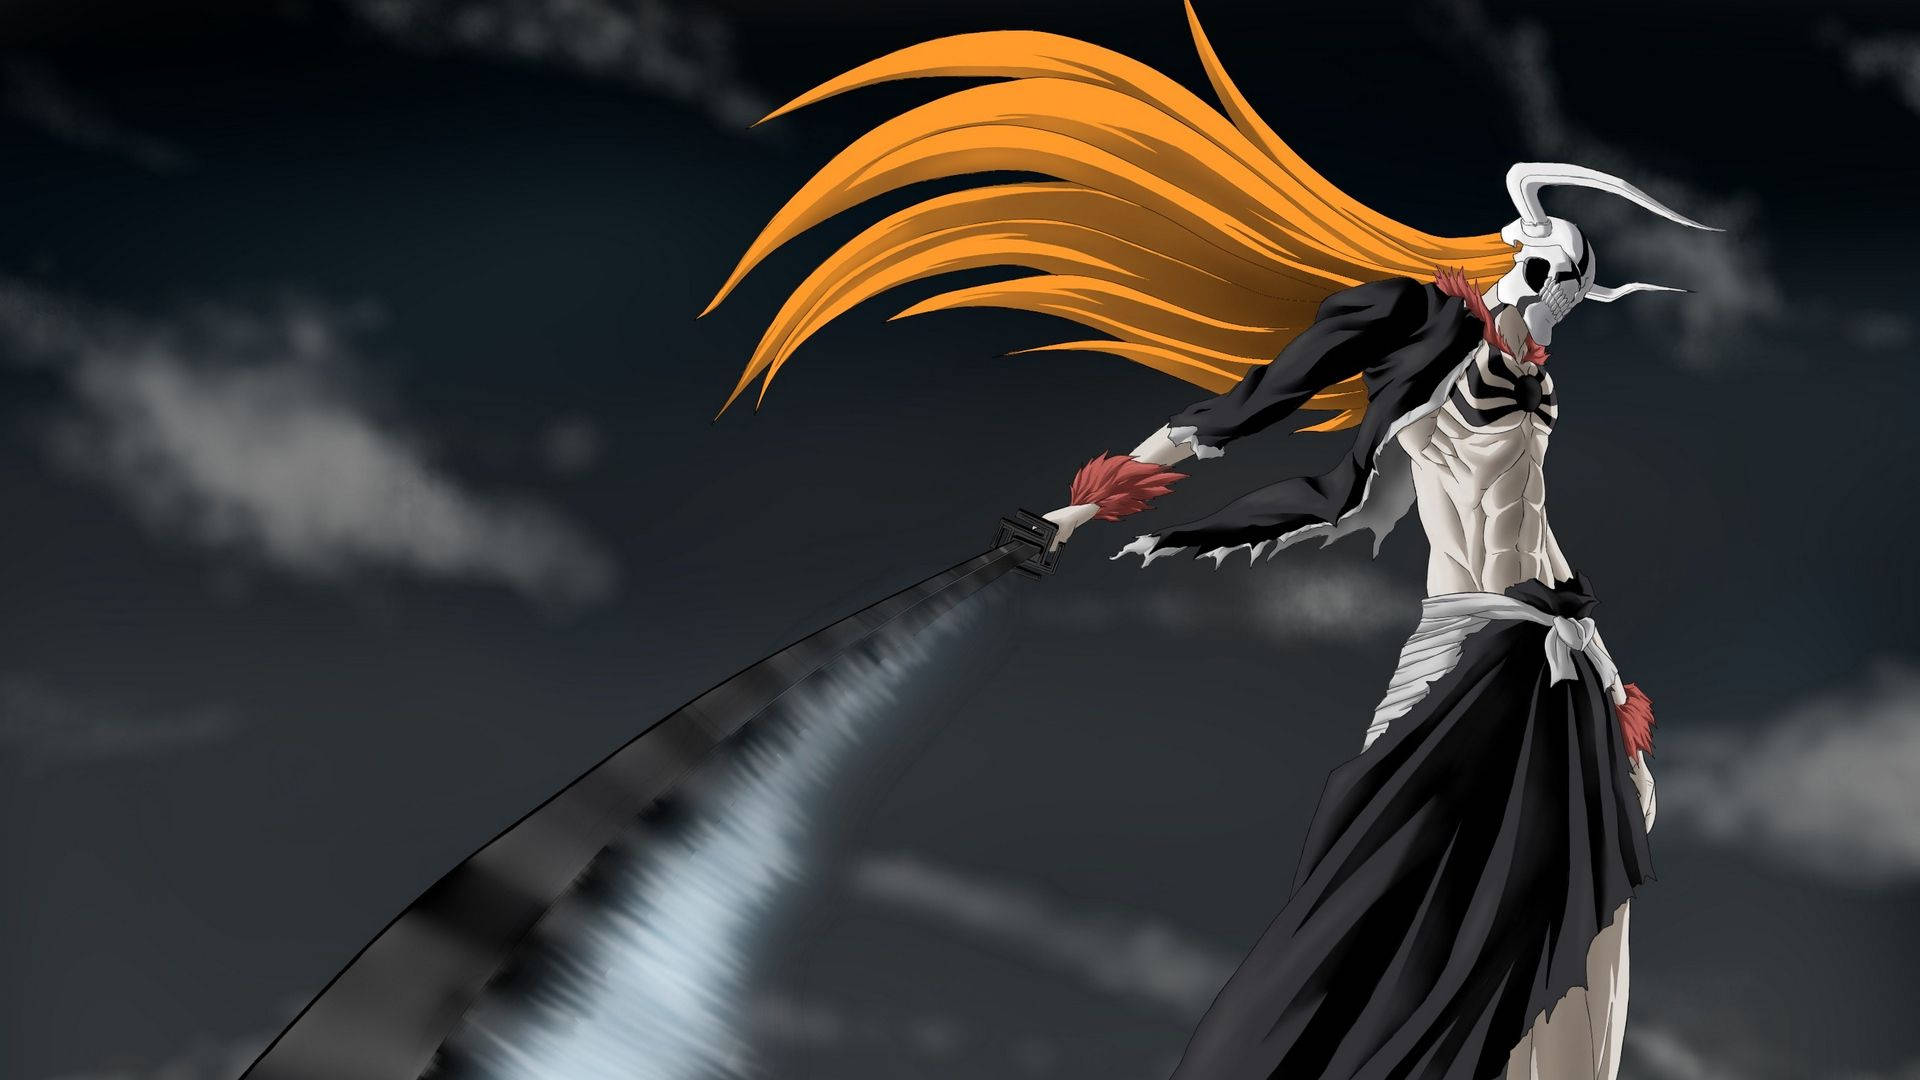 Ichigo - The Heroic Substitute Soul Reaper Wallpaper